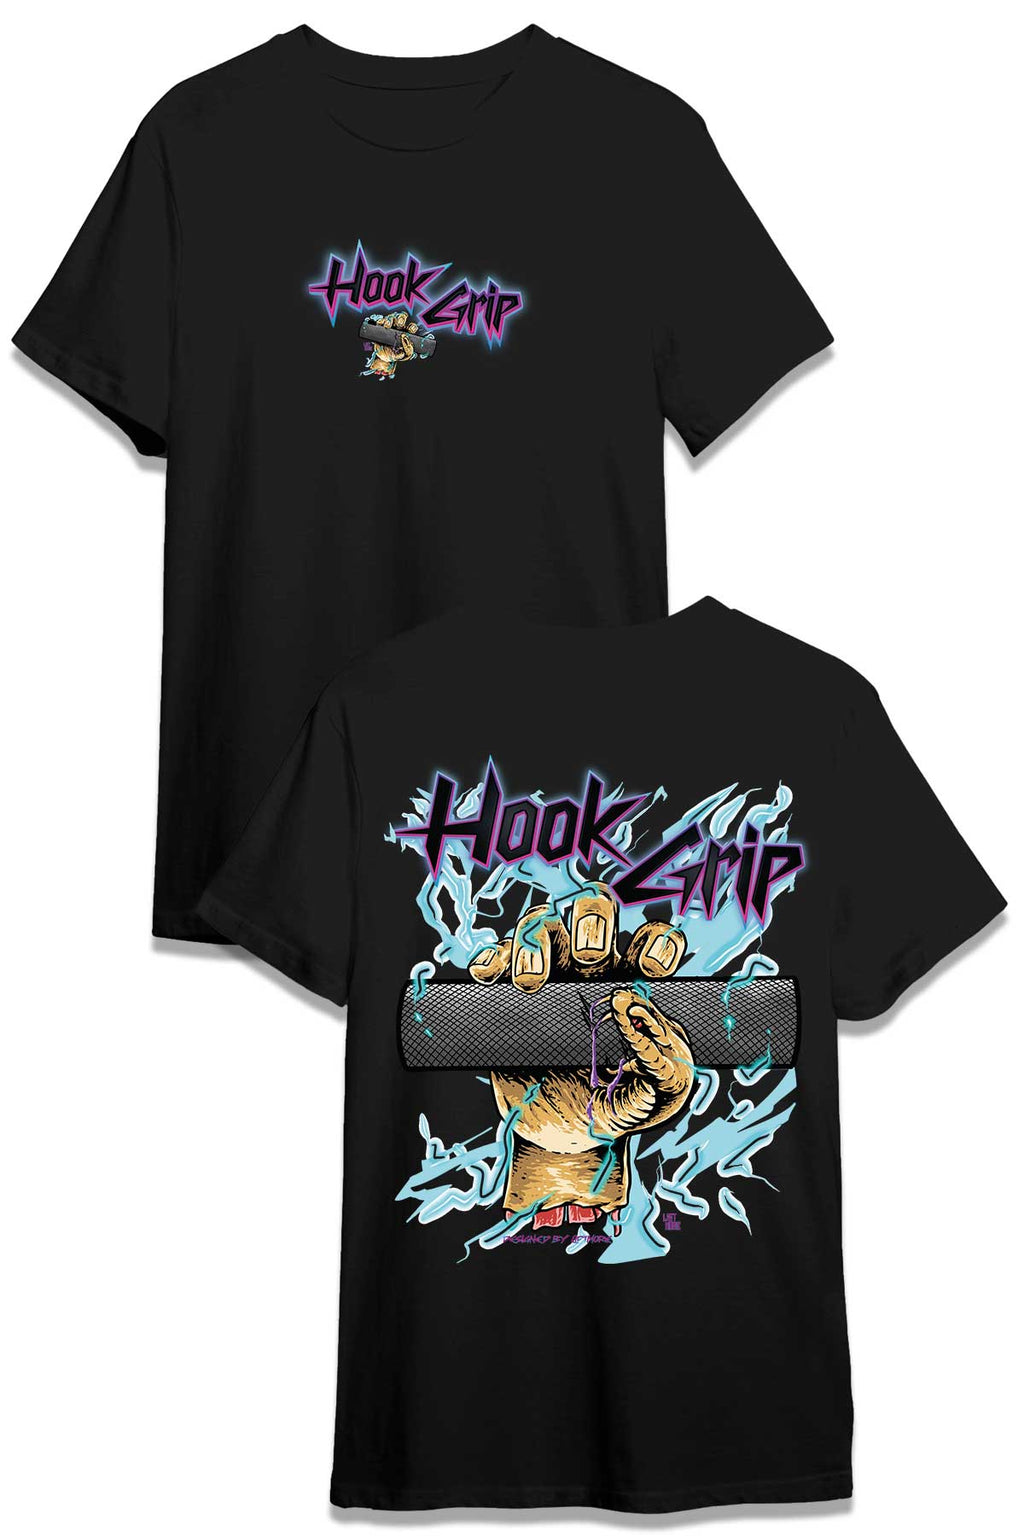 Hook grip Shirt – liftmore